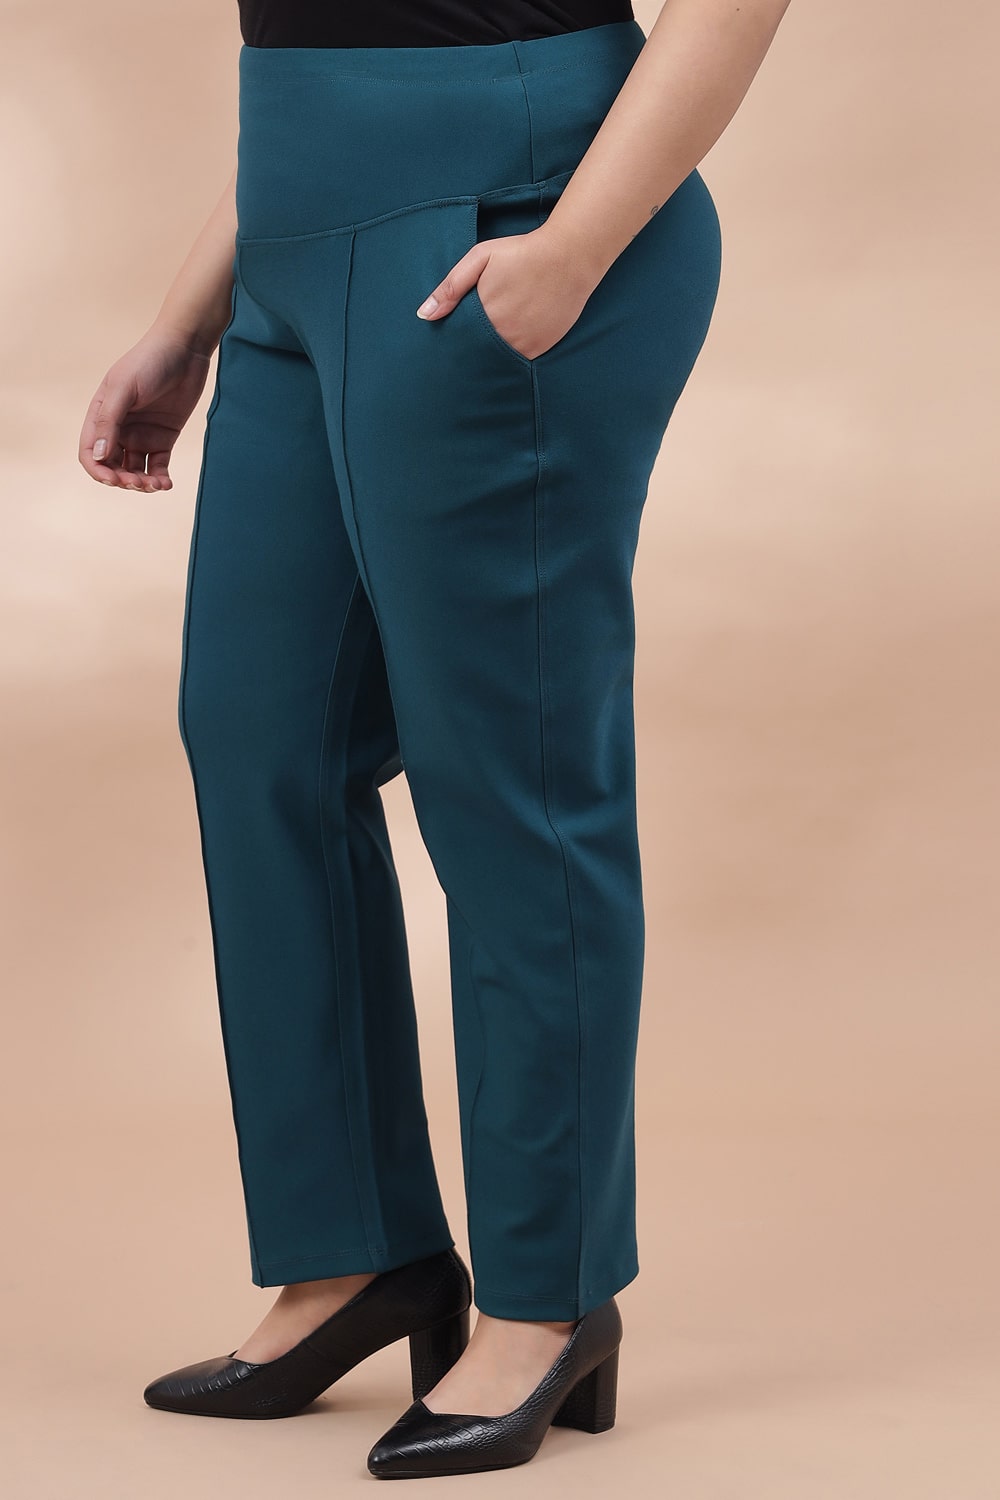 Buy Plus Size Emerald Crease Seam Tummy Tucker Pants Online For Women